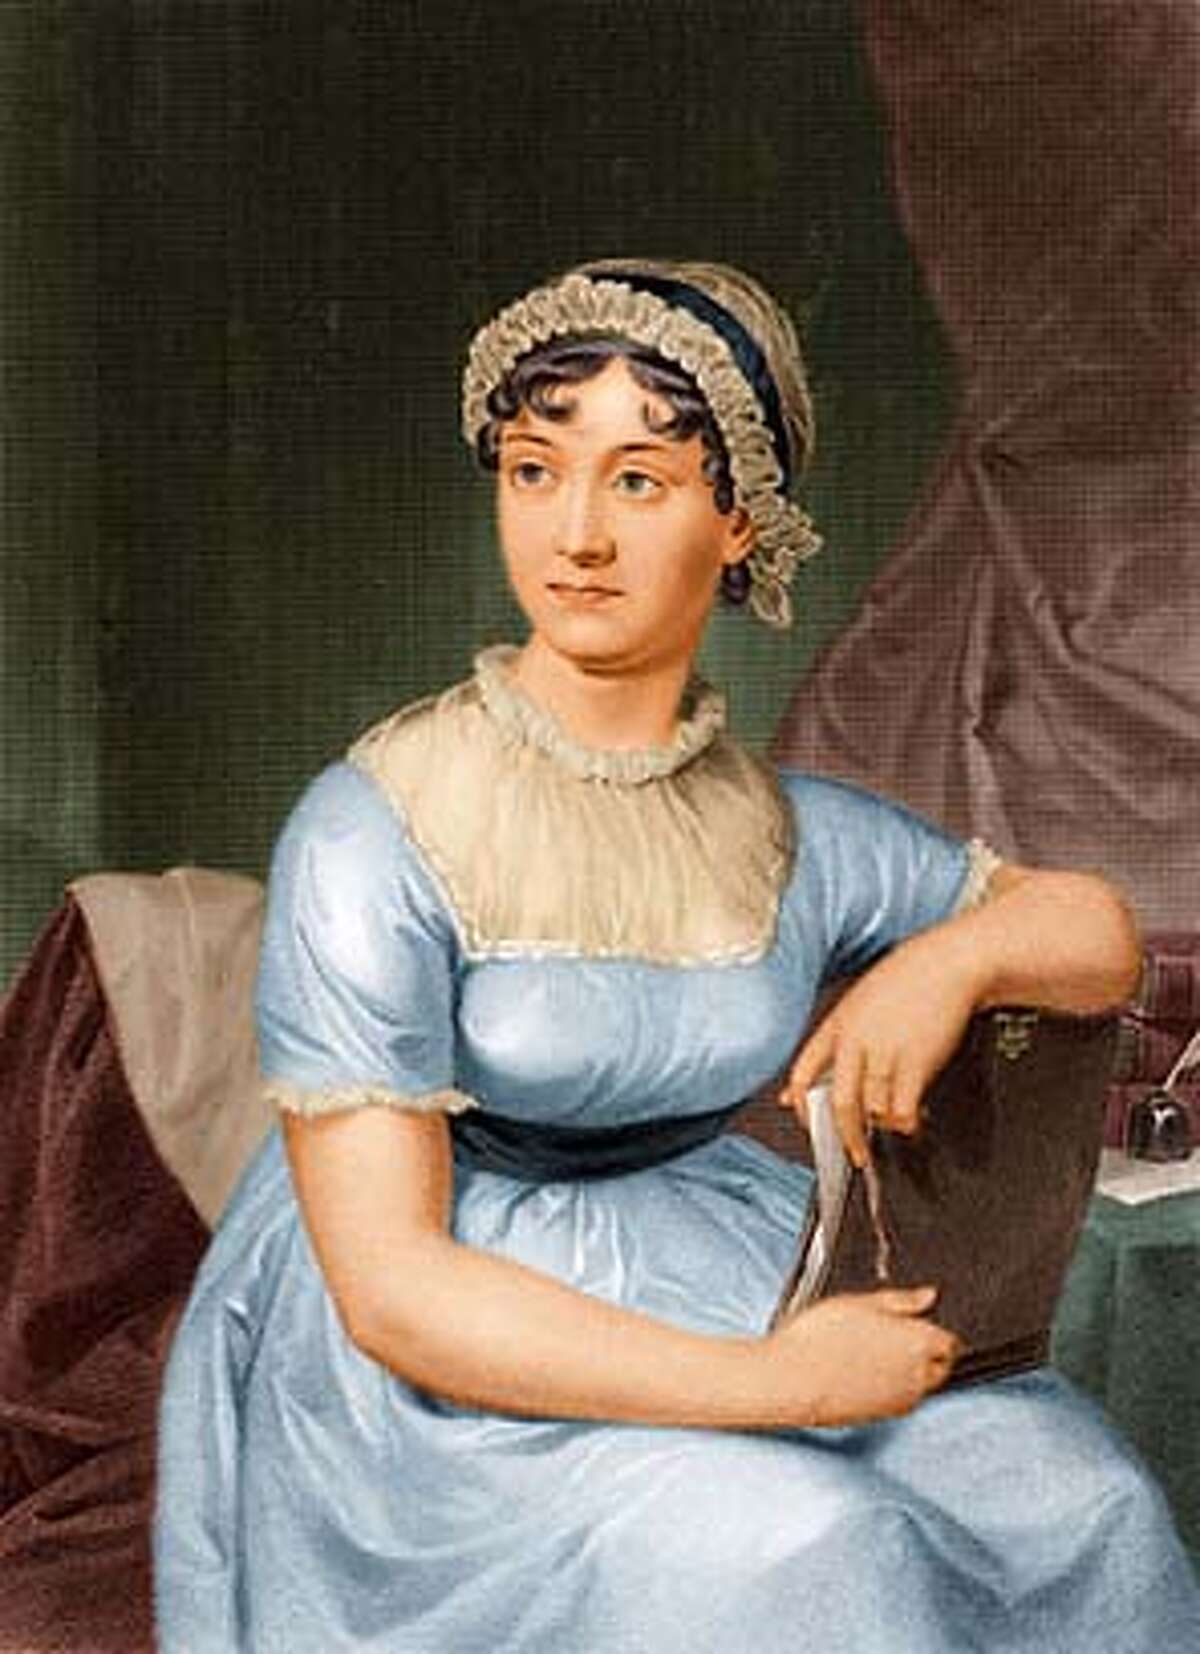 A portrait of Jane Austen